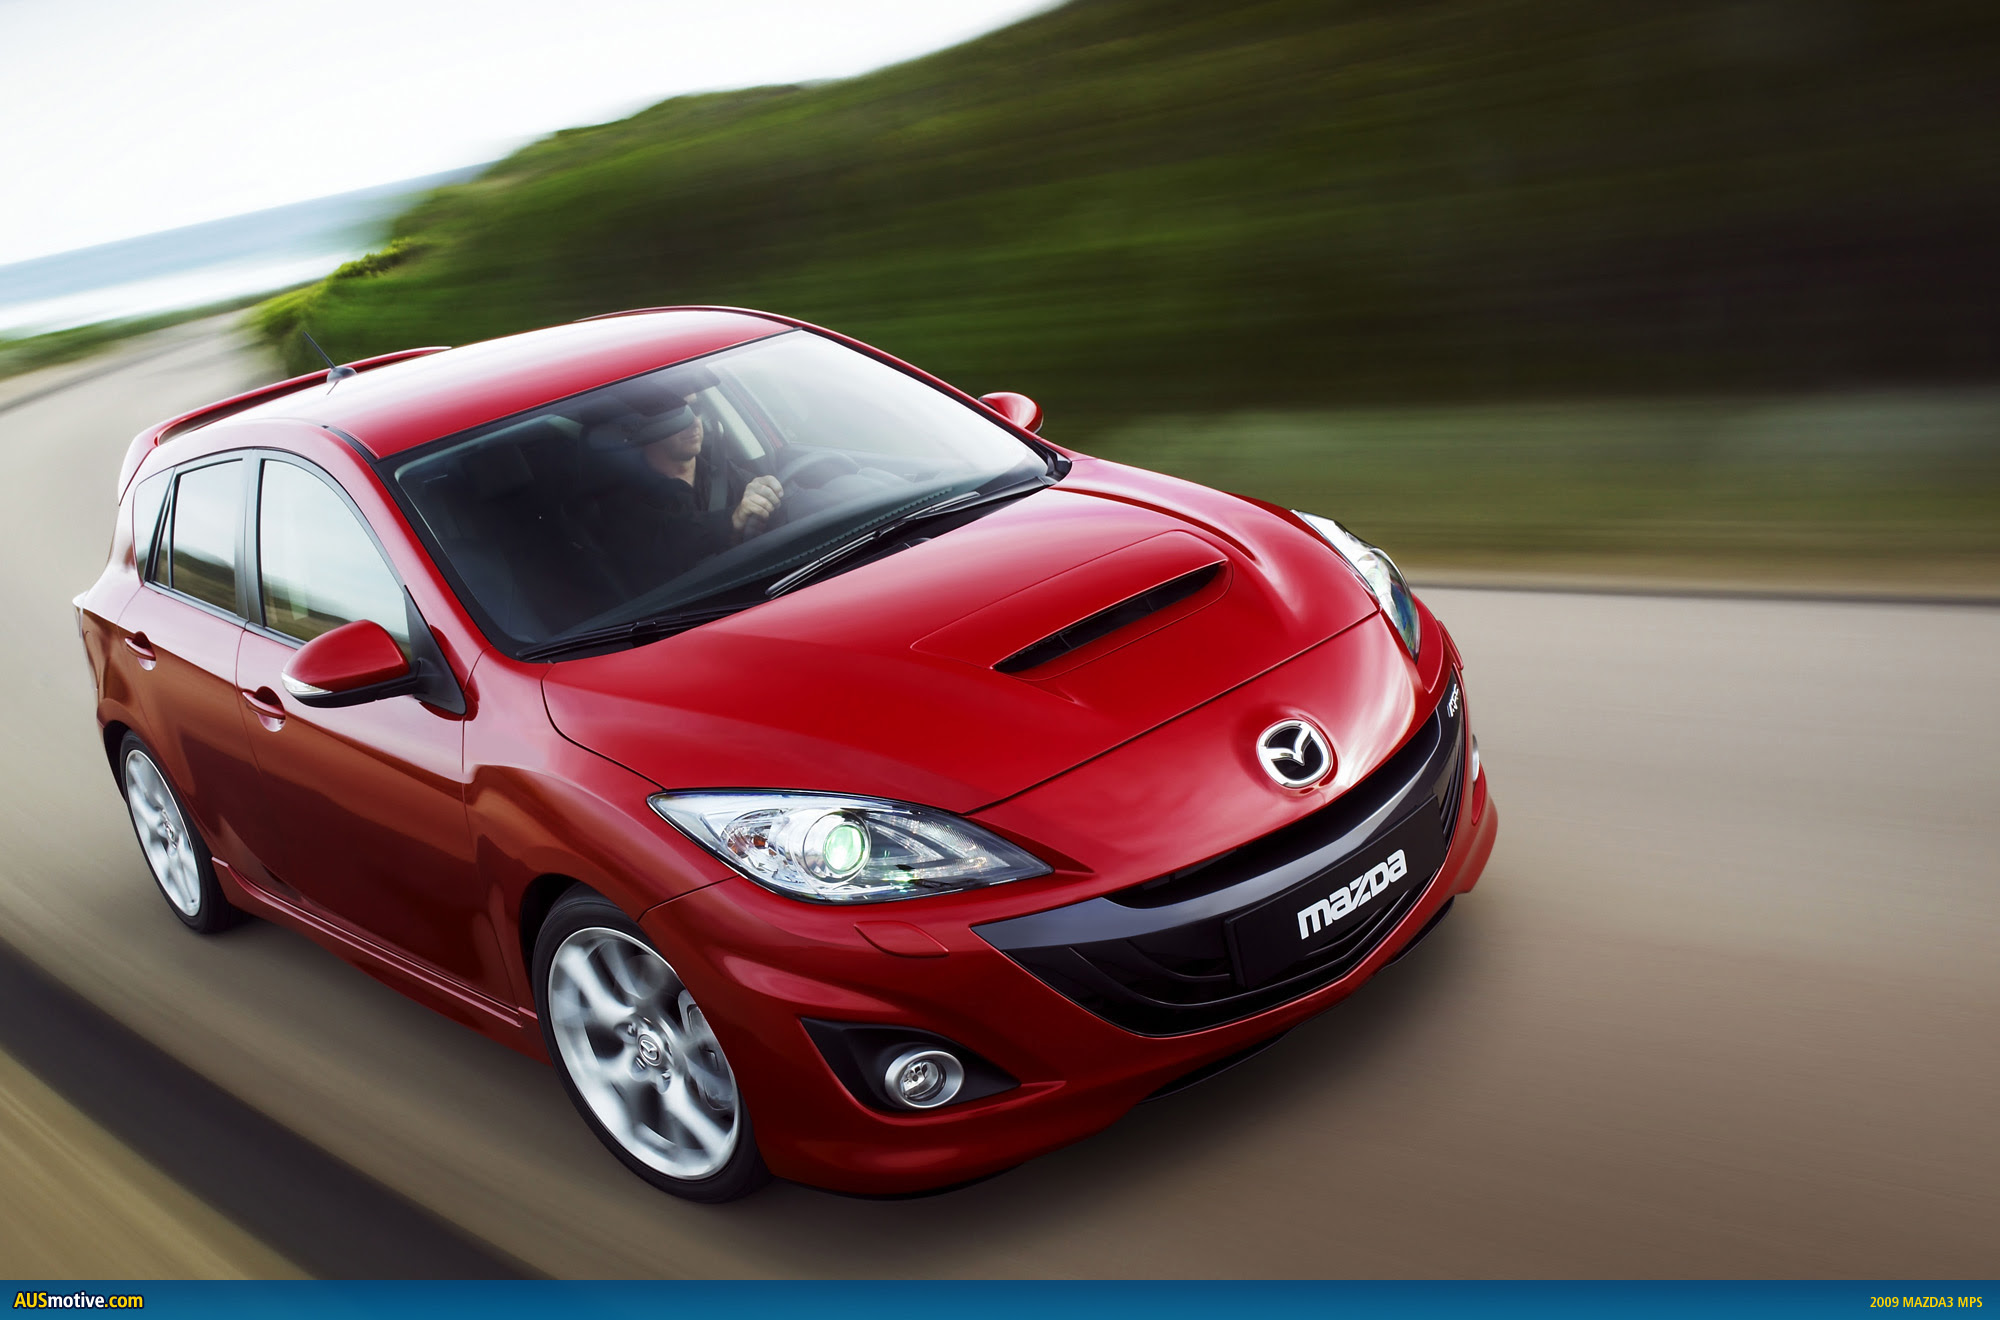 Mazda 3 23 Mps Fuel Consumption Best Auto Cars Reviews